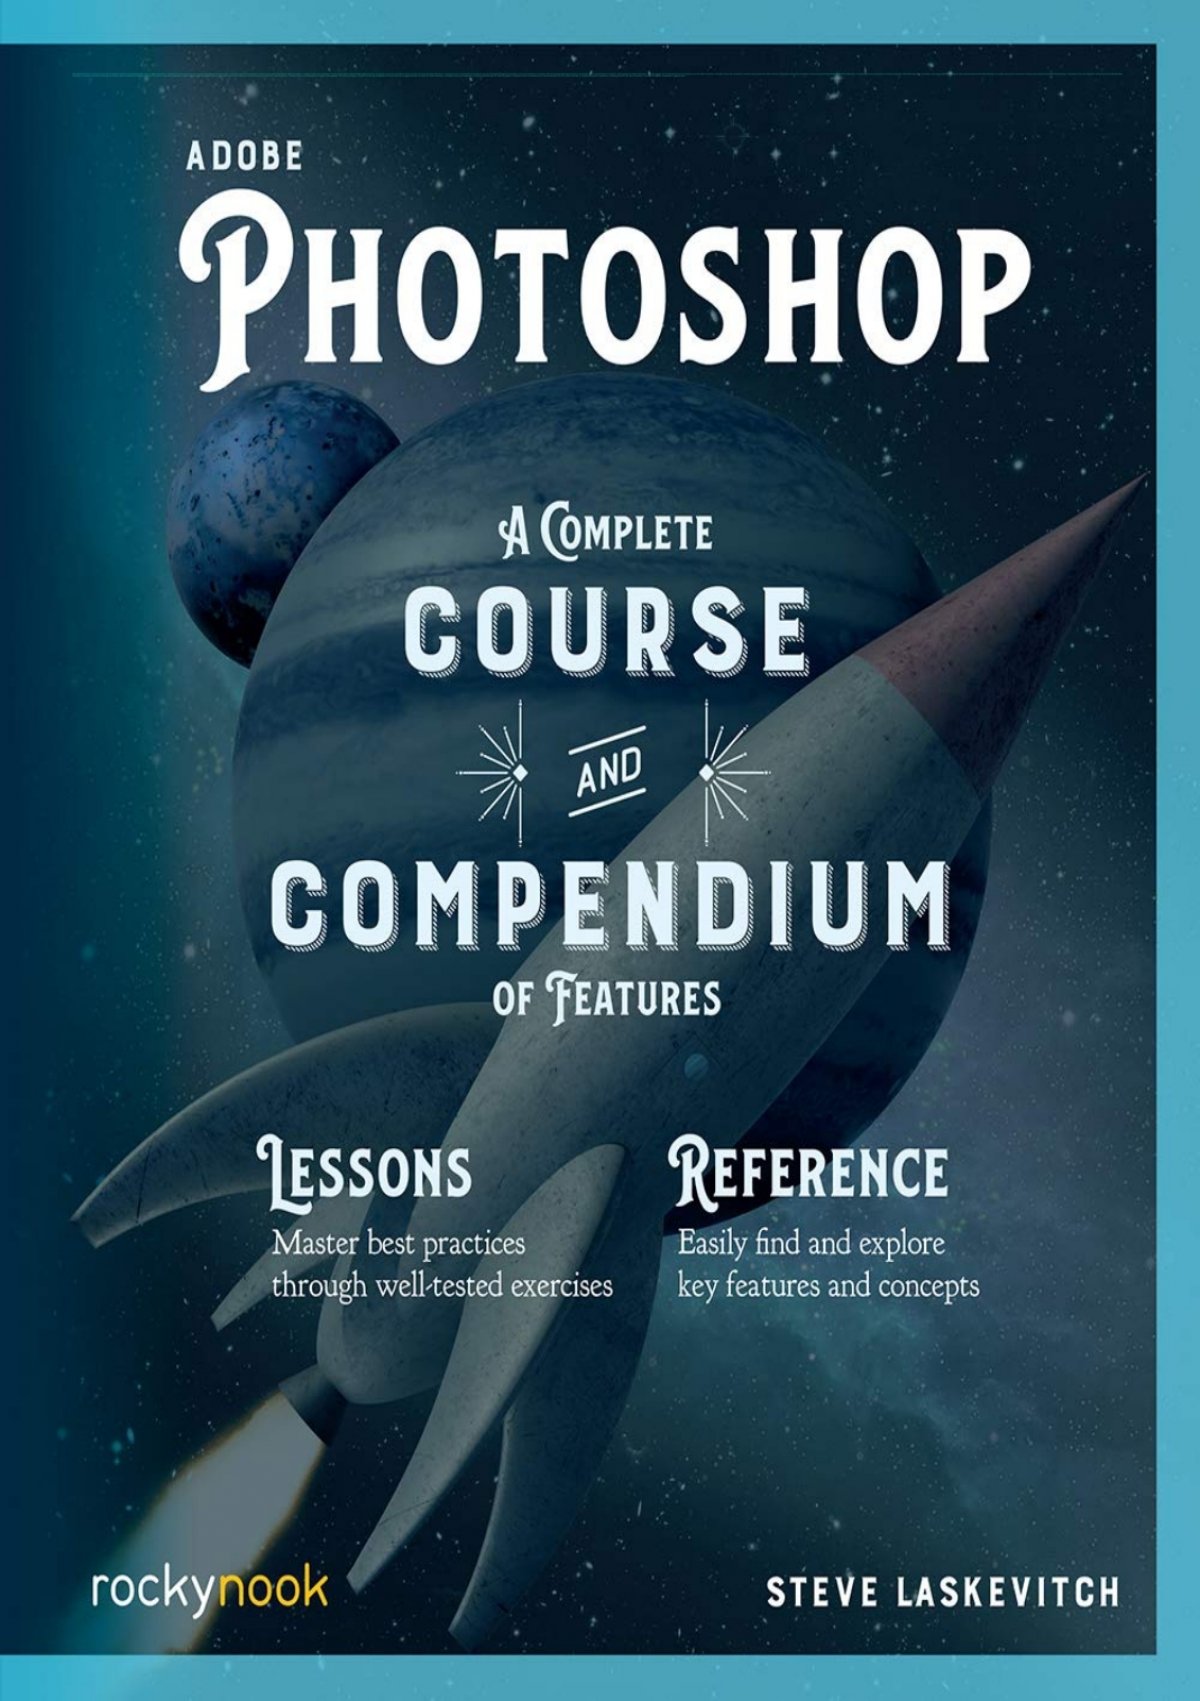 adobe photoshop study material pdf free download